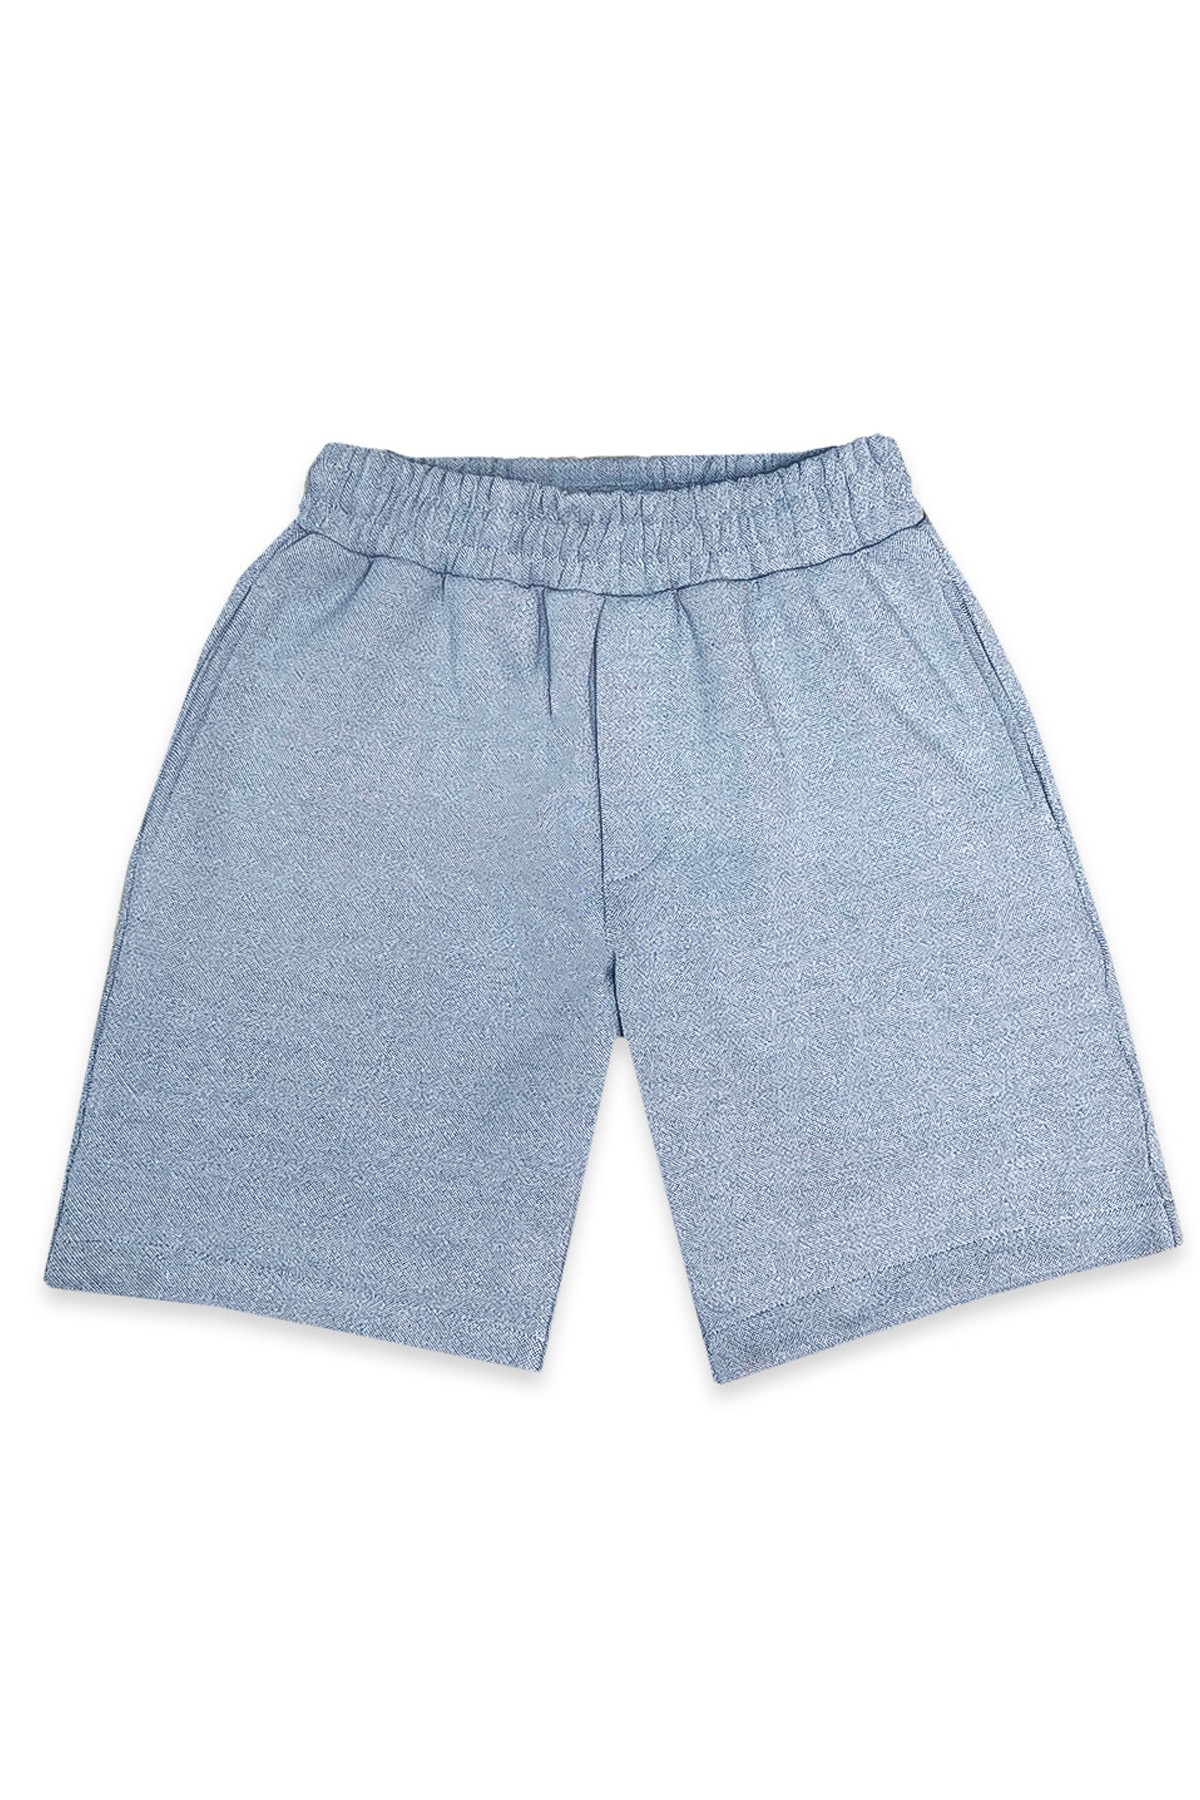 2002 - Jogger Waist Shorts - BABY BLUE